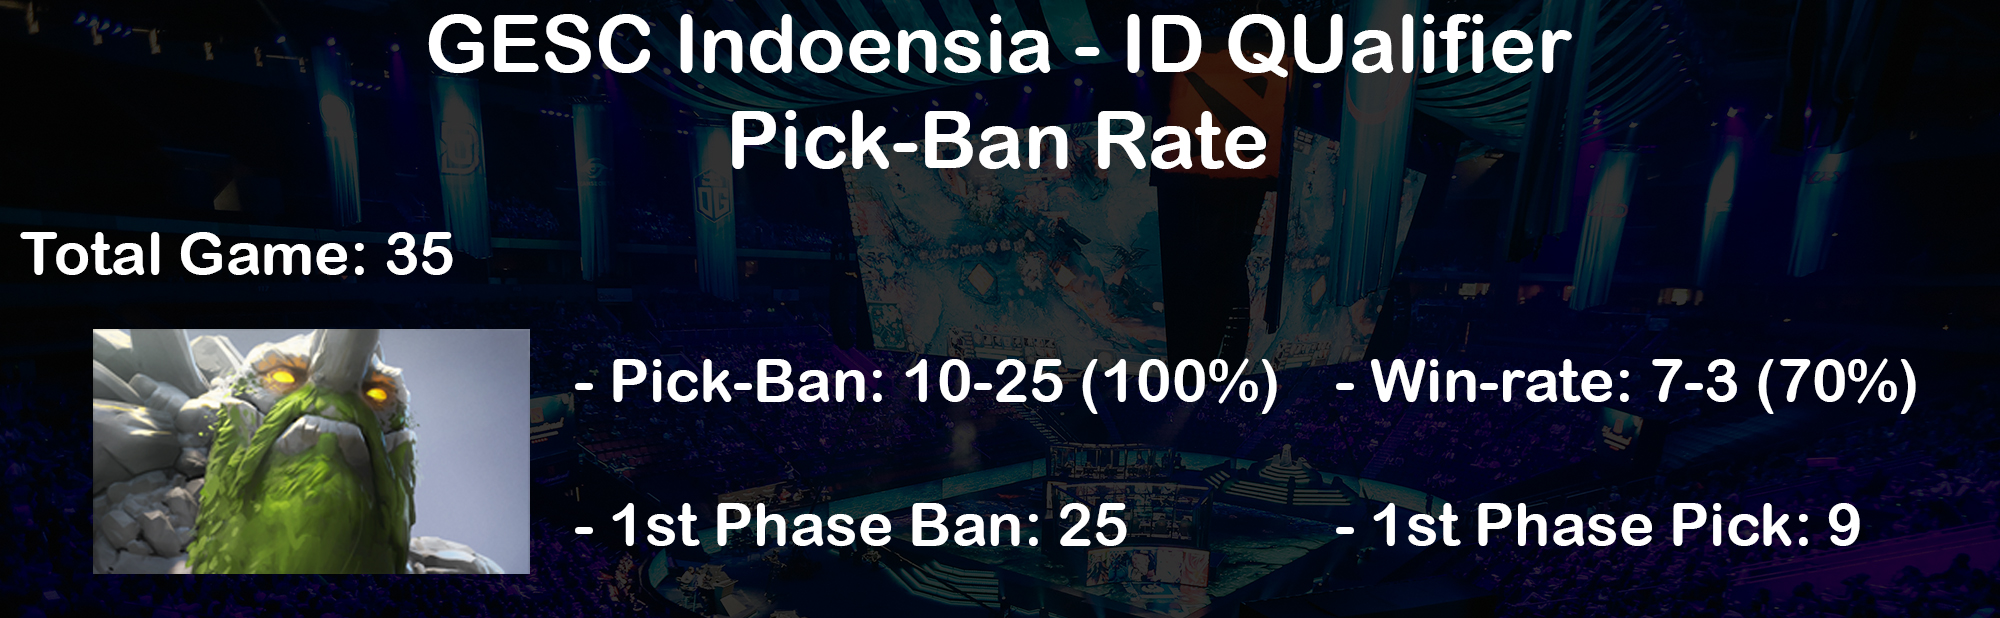 statistik-kualifikasi-gesc-indonesia-tiny